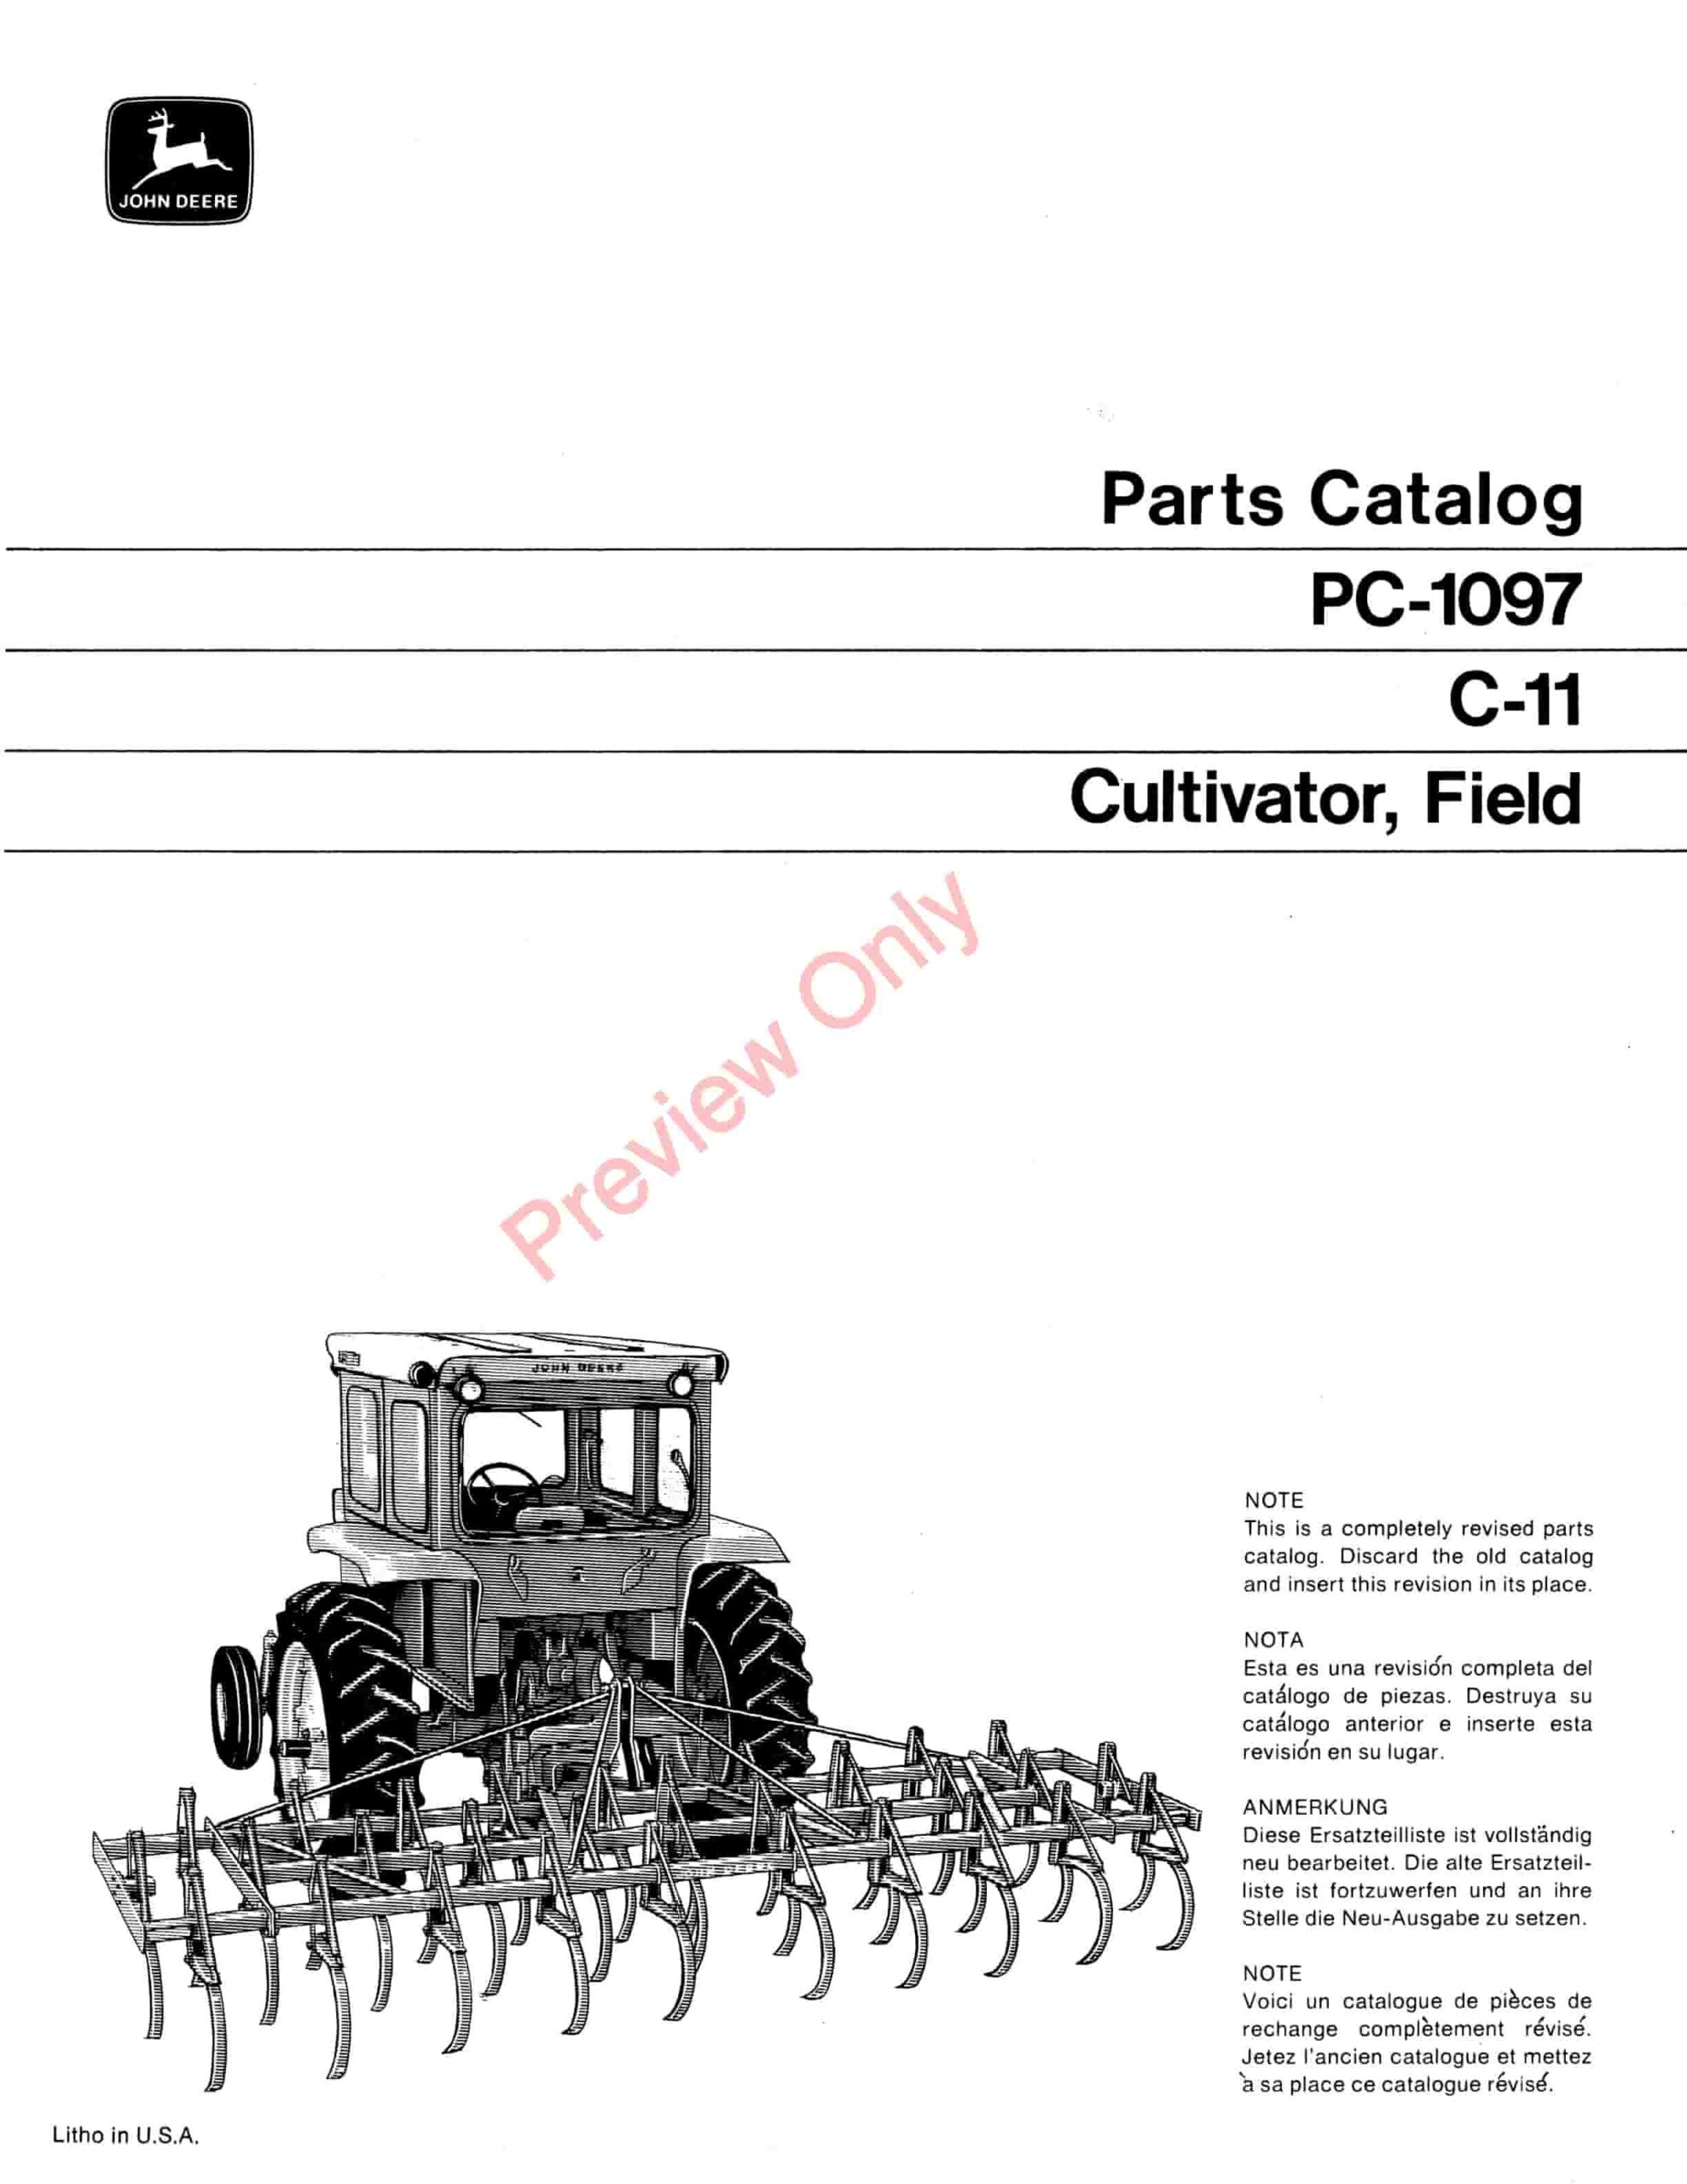 John Deere C-11 Field Cultivator and Culti Parts Catalog PC1097 01FEB71-1